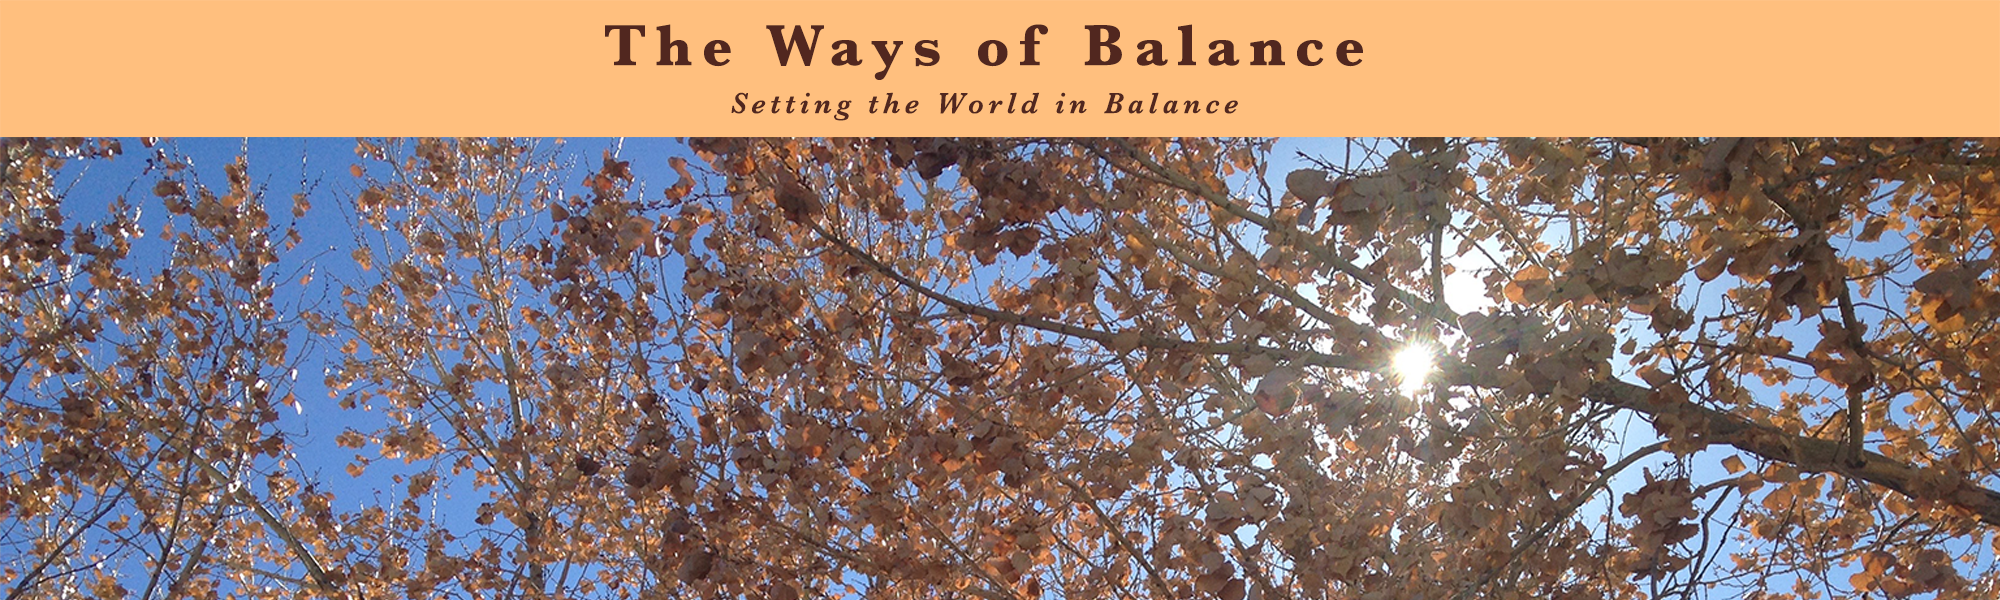 The Ways of Balance